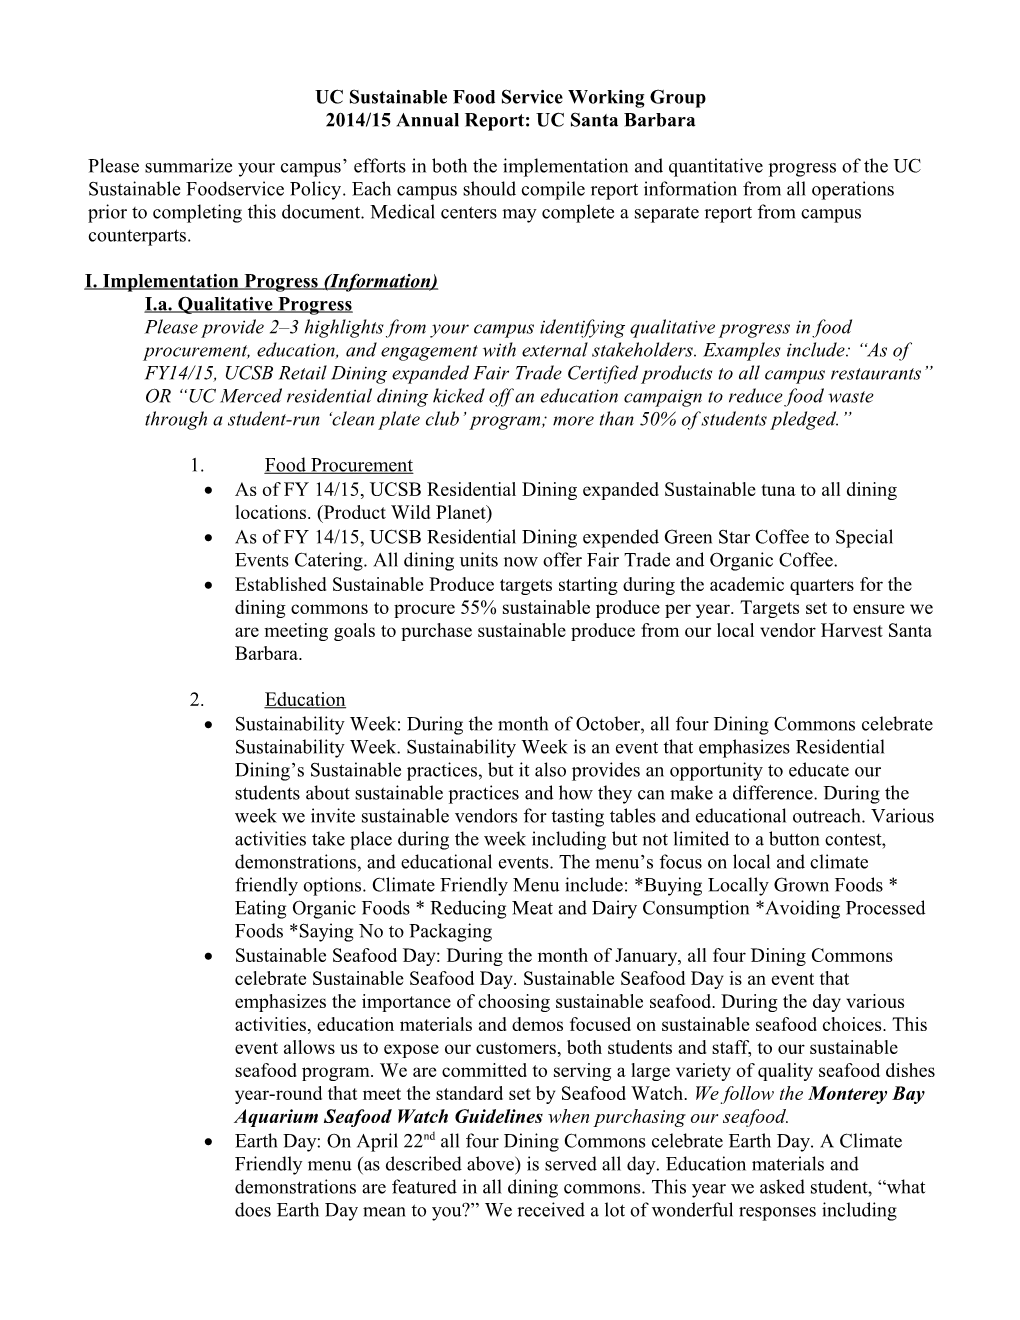 UC SFSWG - Annual Report Template